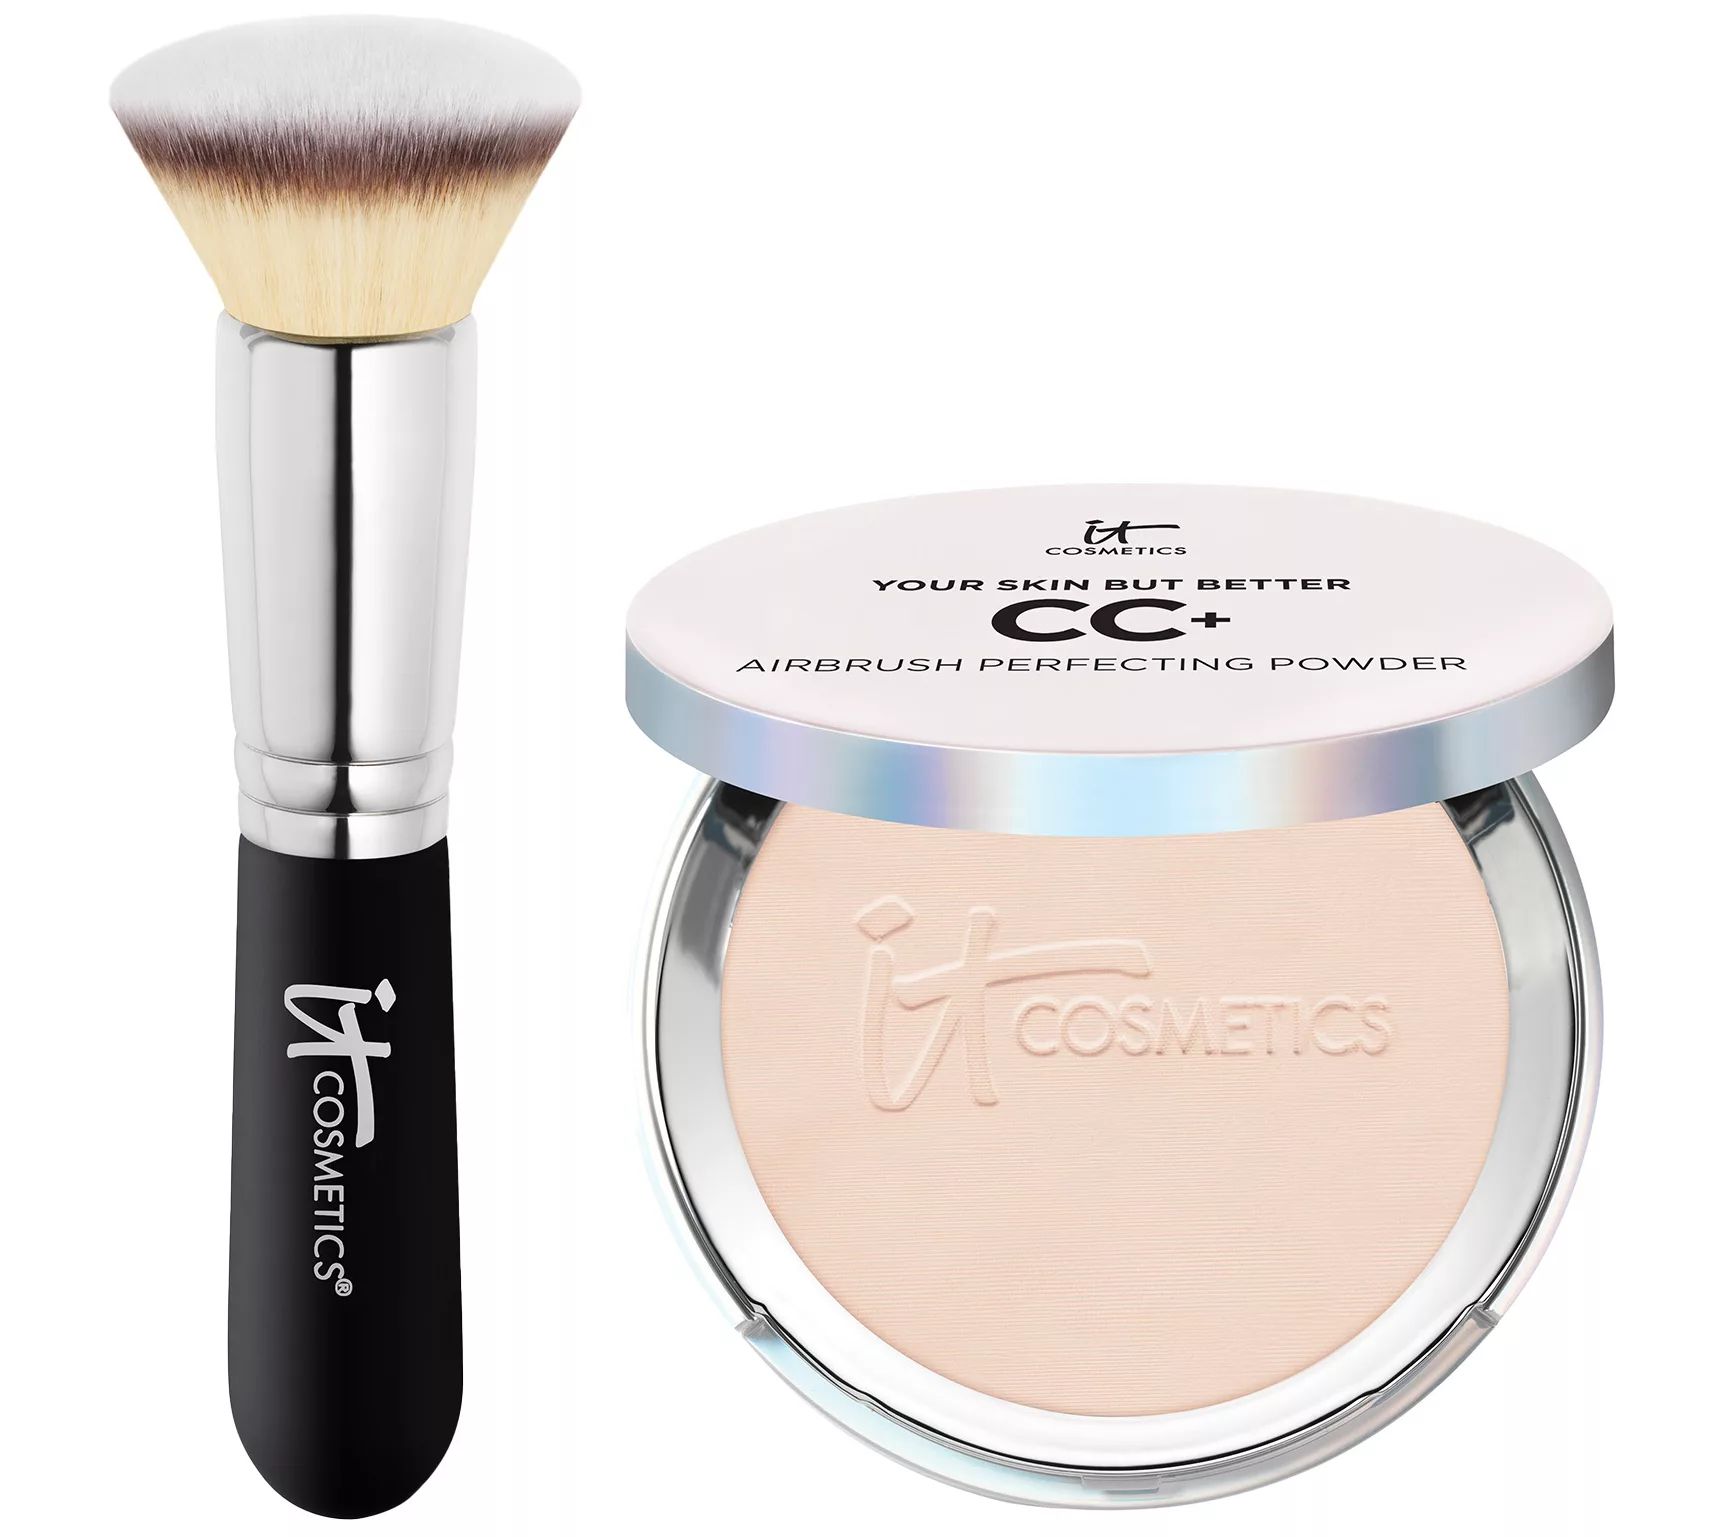 IT Cosmetics CC+ Perfecting Powder Foundation with Brush | QVC